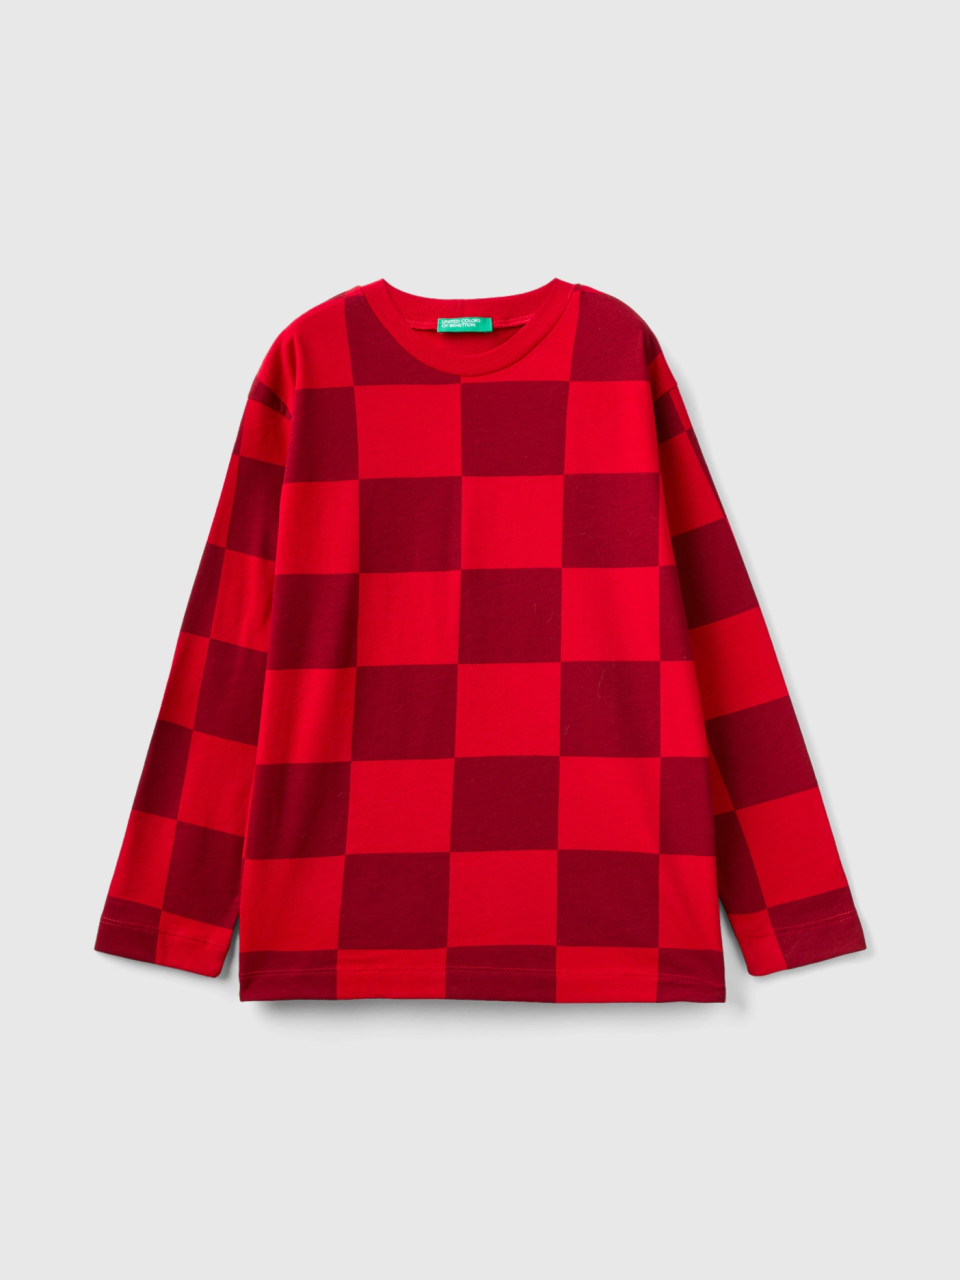 Benetton, Warm Checkered T-shirt, Red, Kids